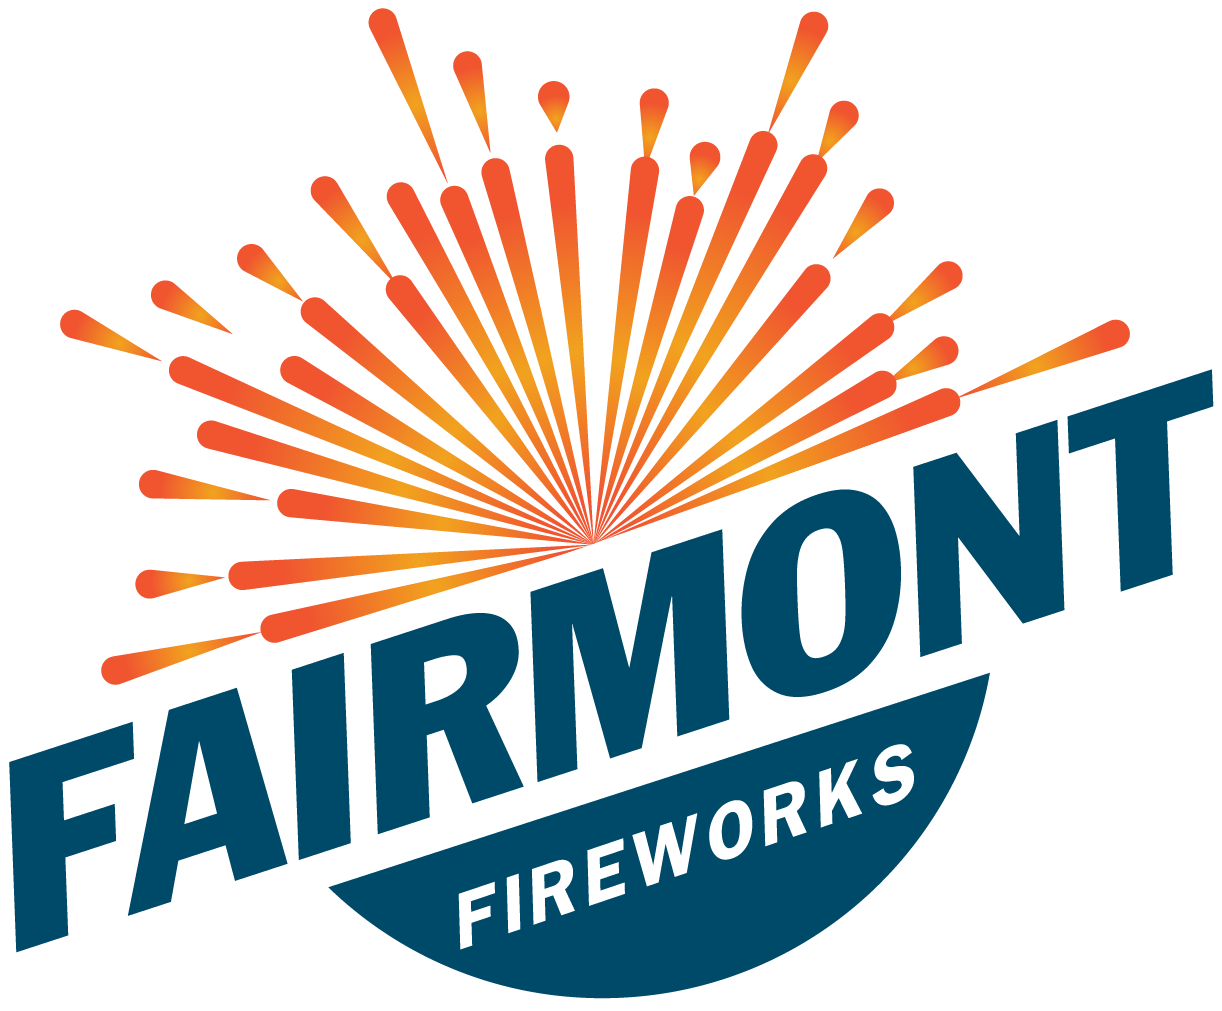 Fairmont Fireworks